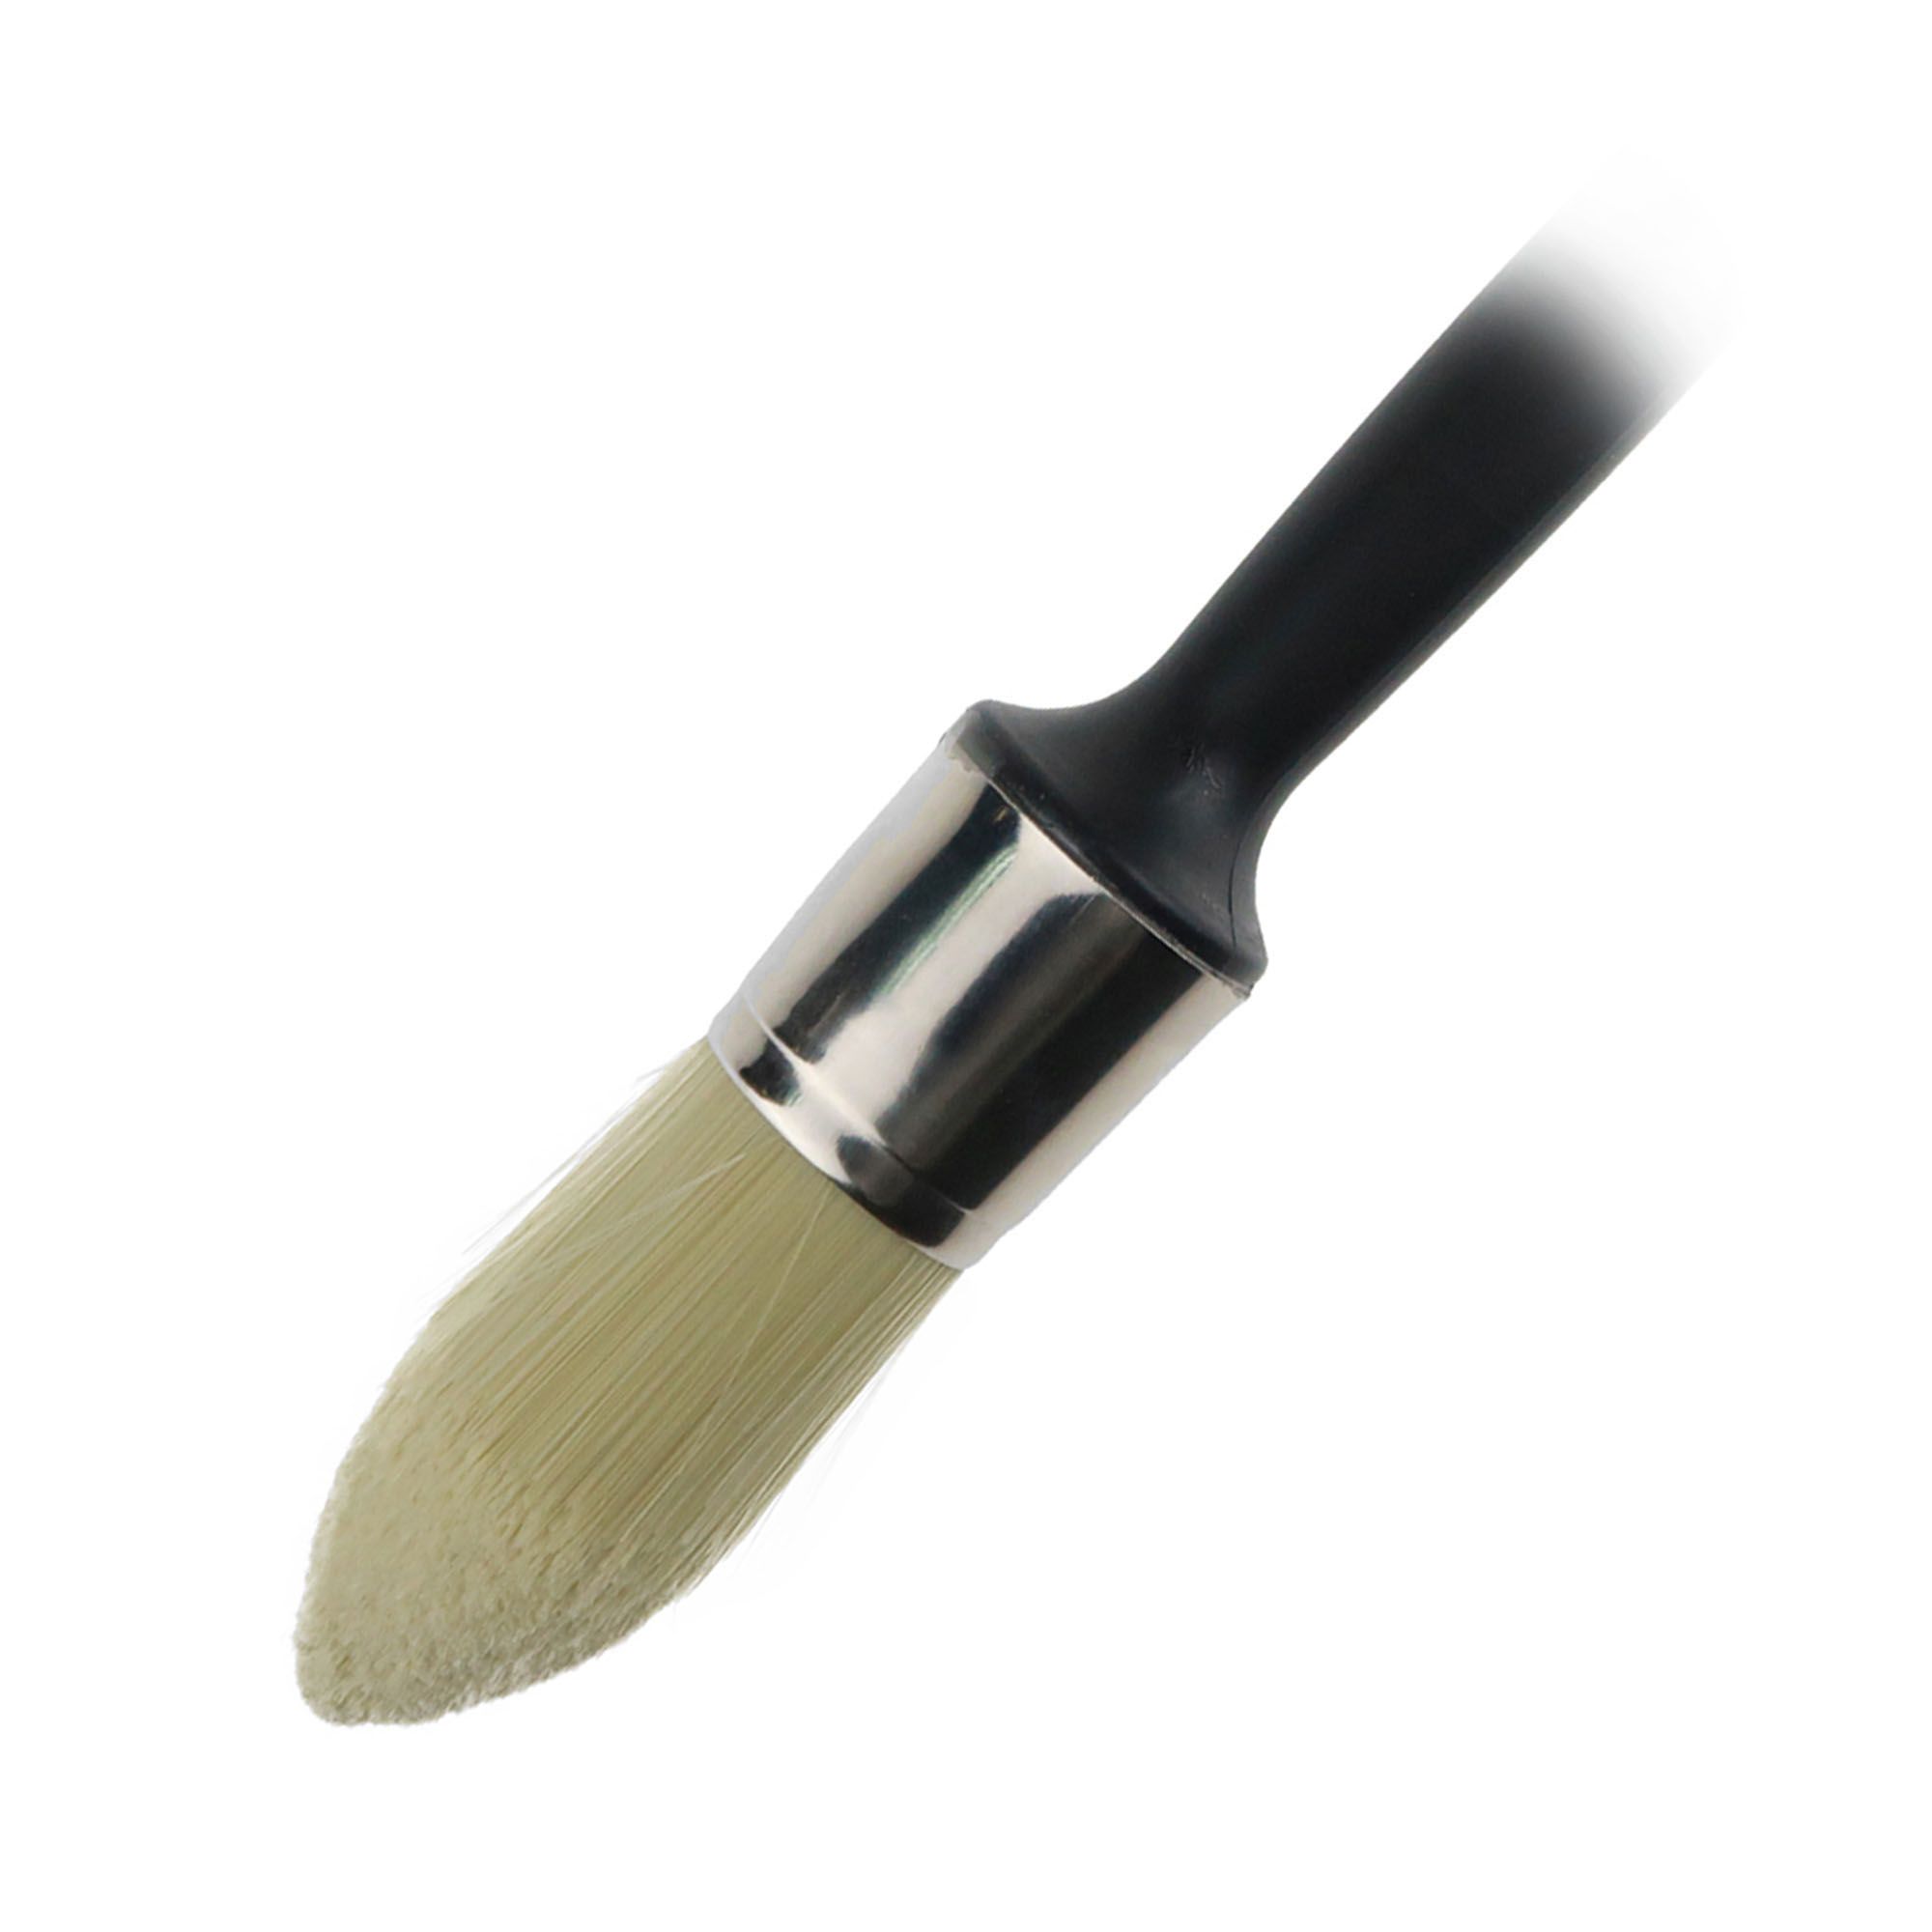 1¼" Flagged tip Swan neck paint brush